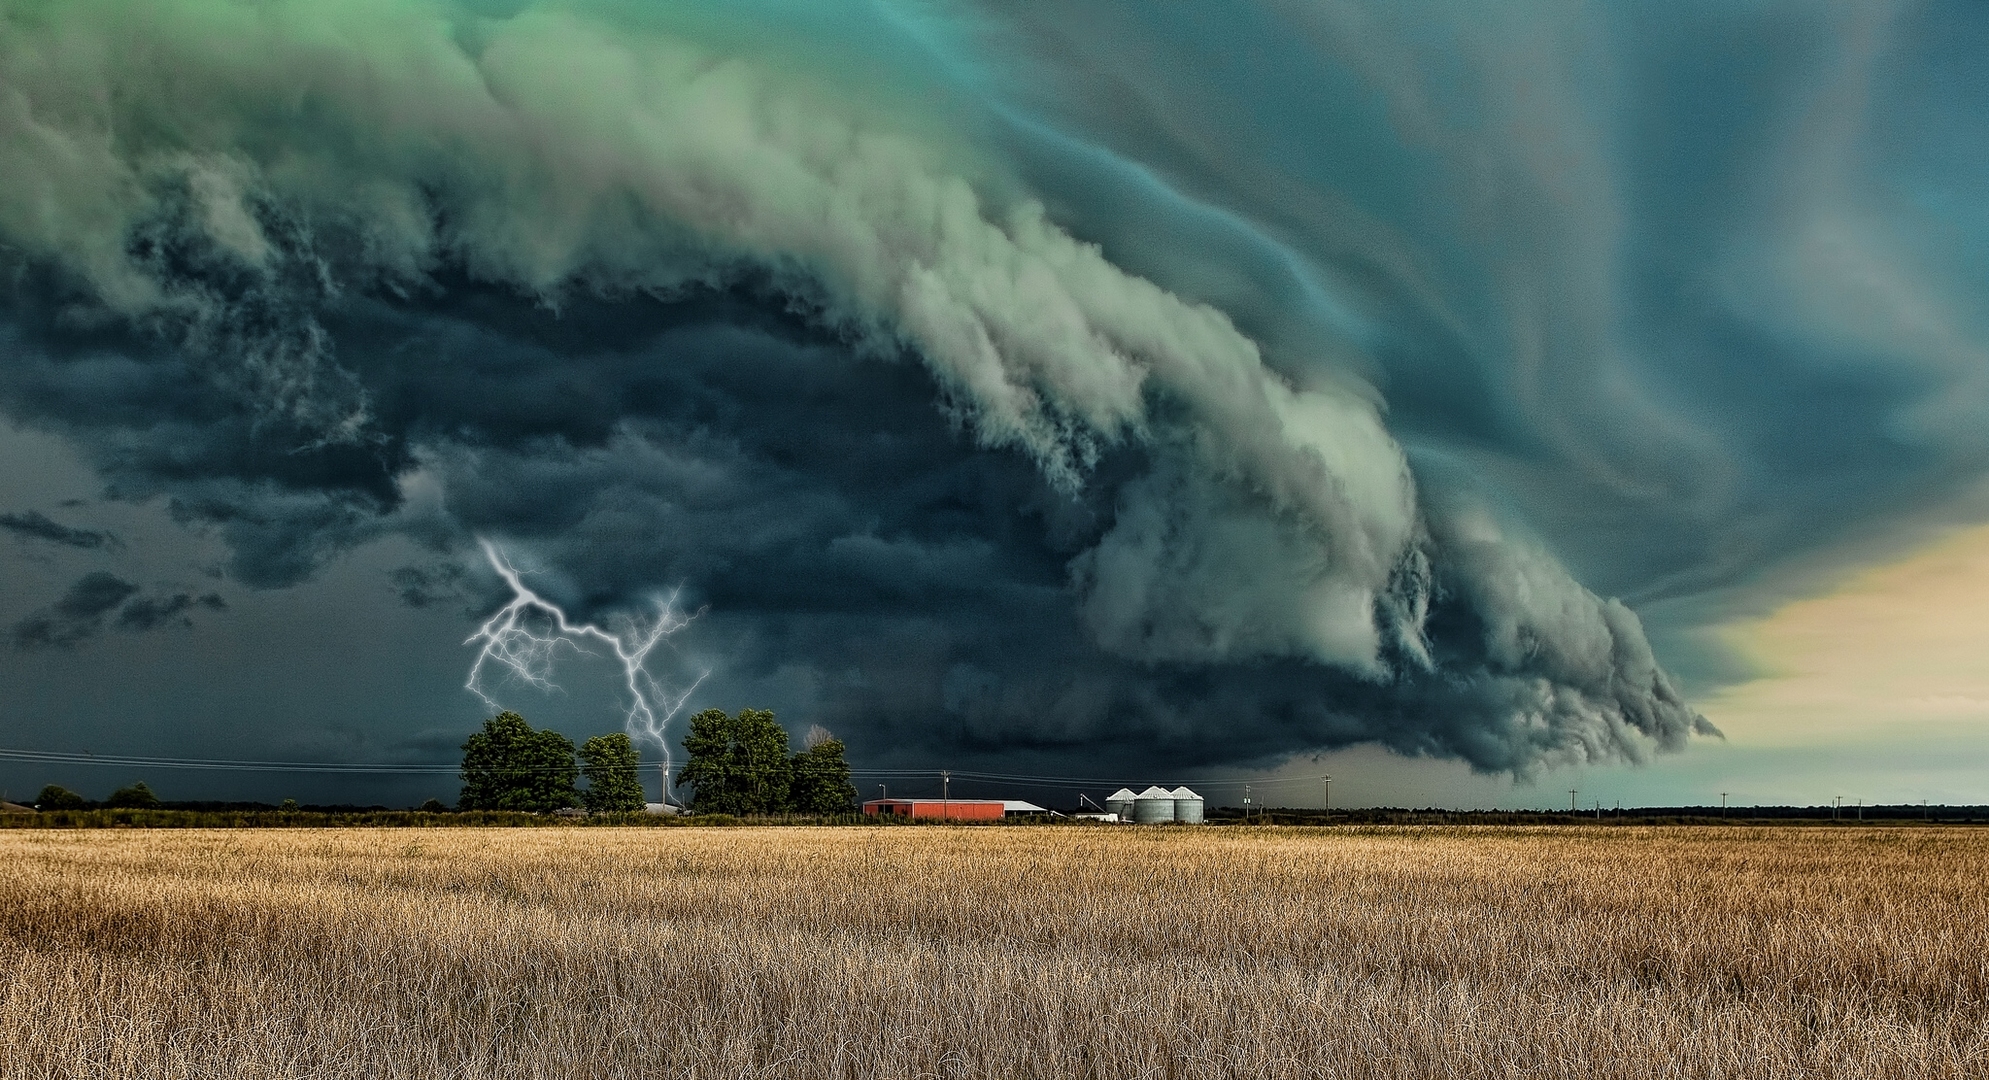 landscapes, Manipulations, Cg, Digital art, Storms, Rain, Lightning, Farms, Farmland, Fields, Skies, Clouds Wallpaper